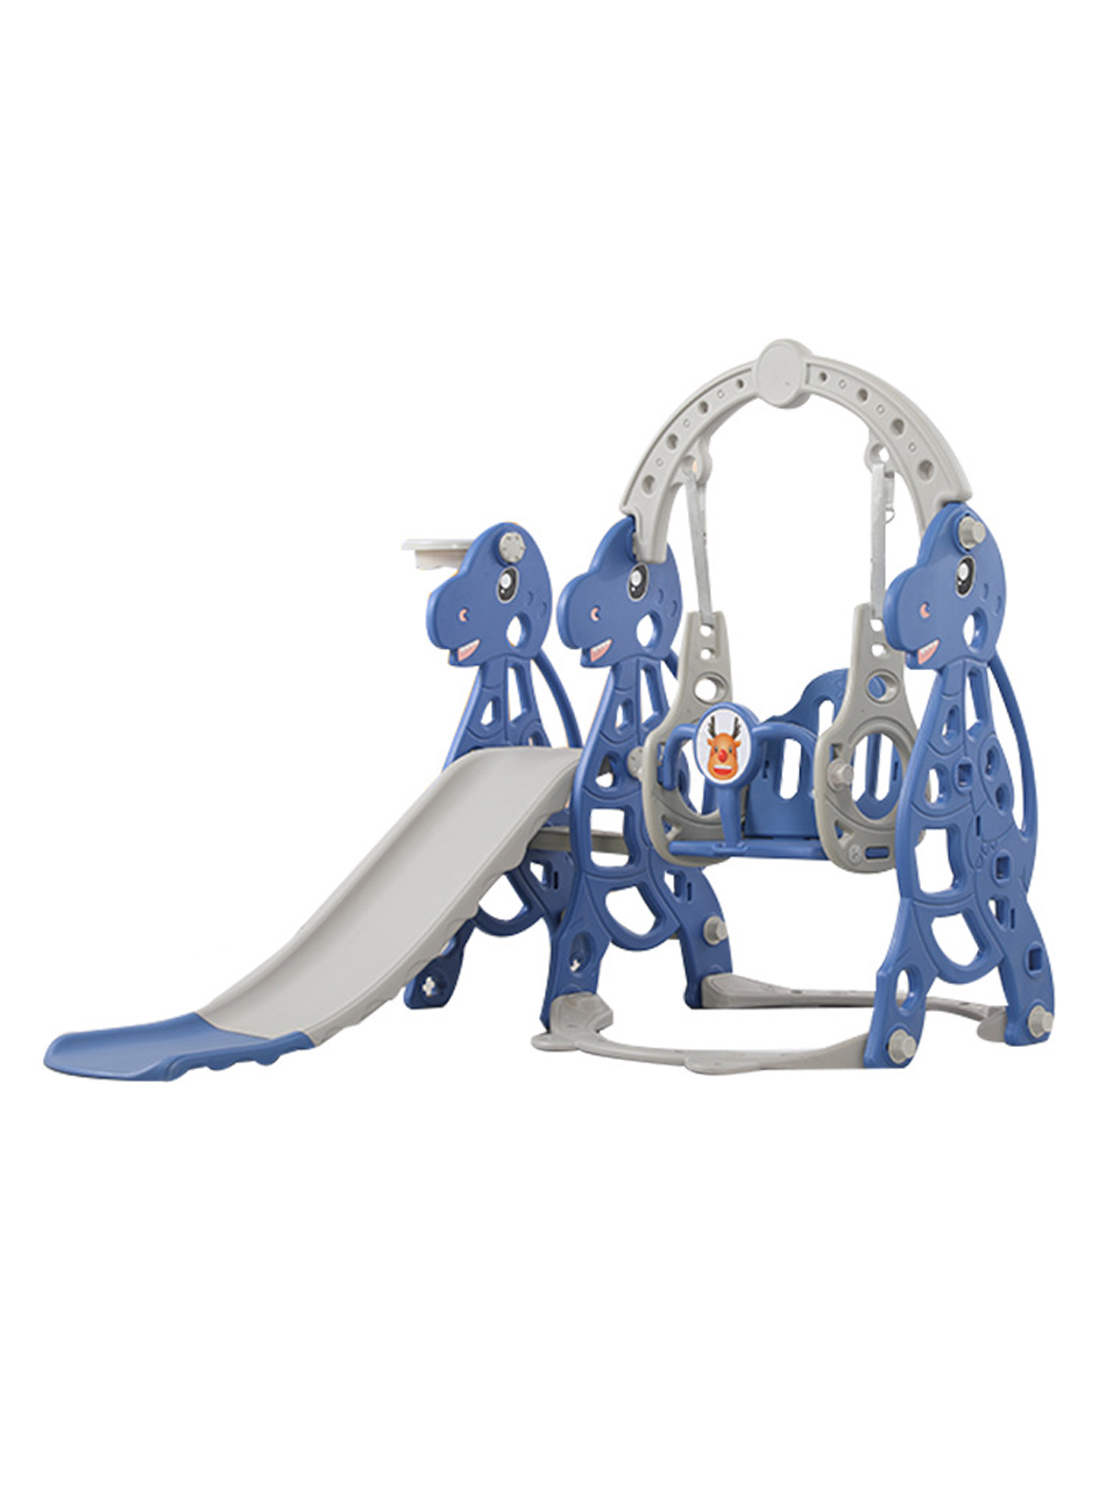 4 in 1 Toddler Slide Swing Set, Indoor Baby Slide, Includes Slide, Swing, Basketball Hoop, and Climber, Freestanding Slide Climber Playset Toy